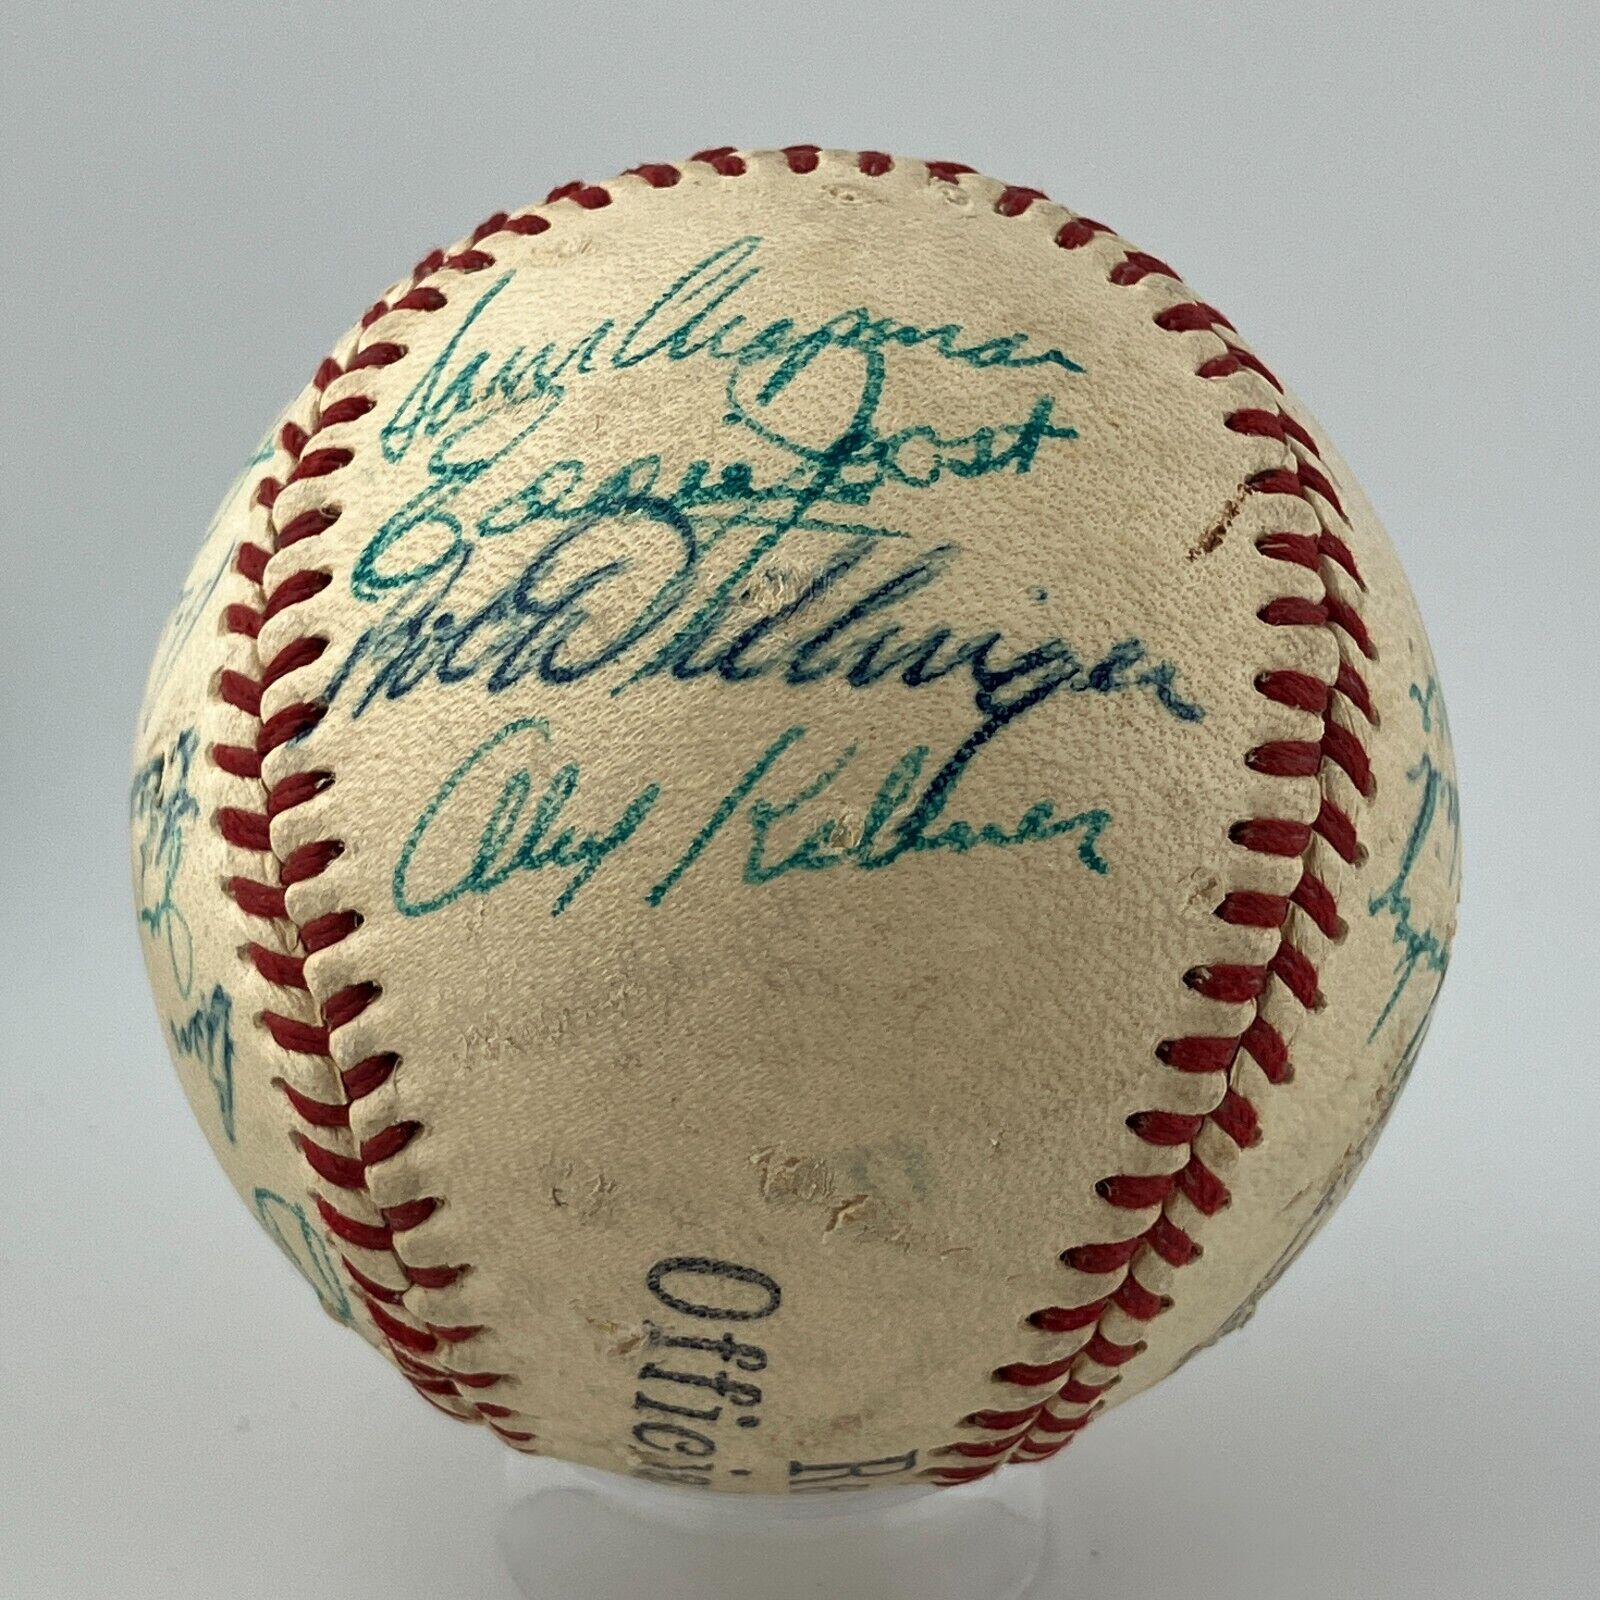 1950 Philadelphia Athletics Team Ball. (Clubhouse Signatures)